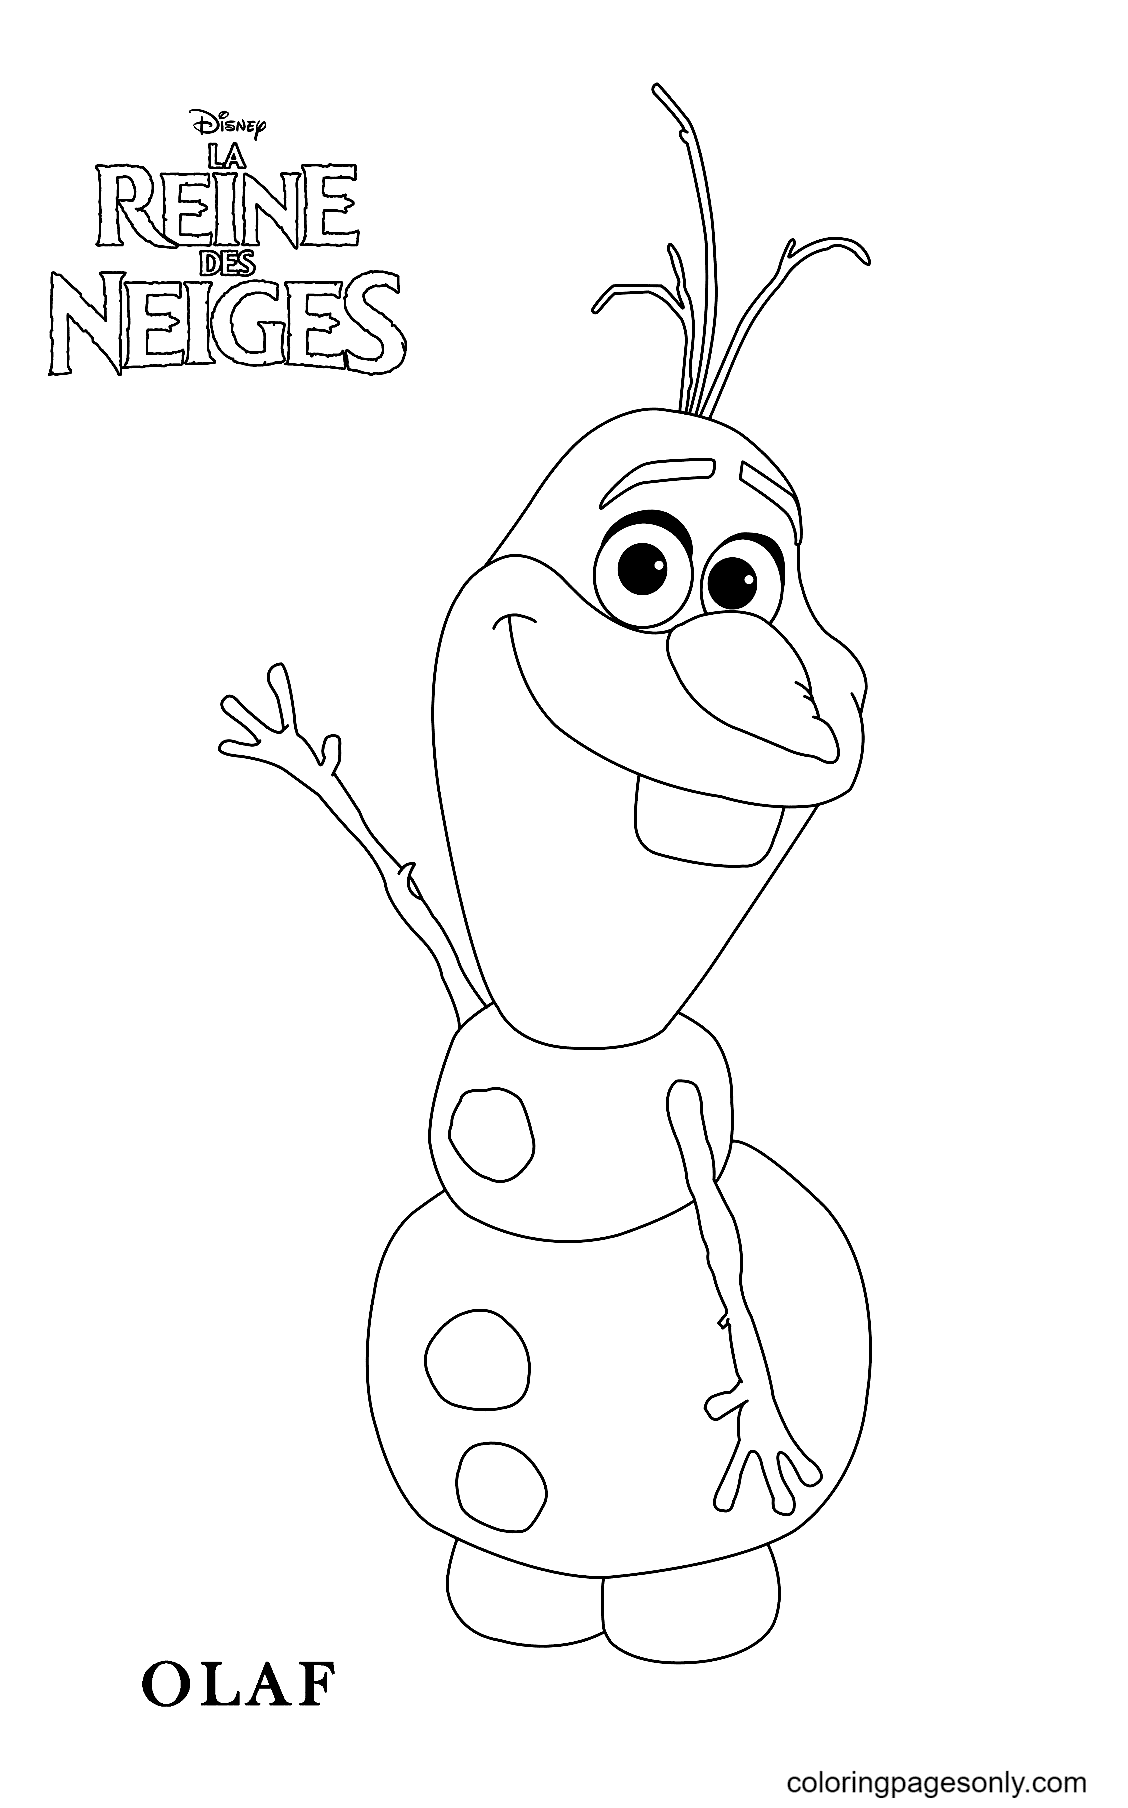 L'amichevole Olaf di Olaf